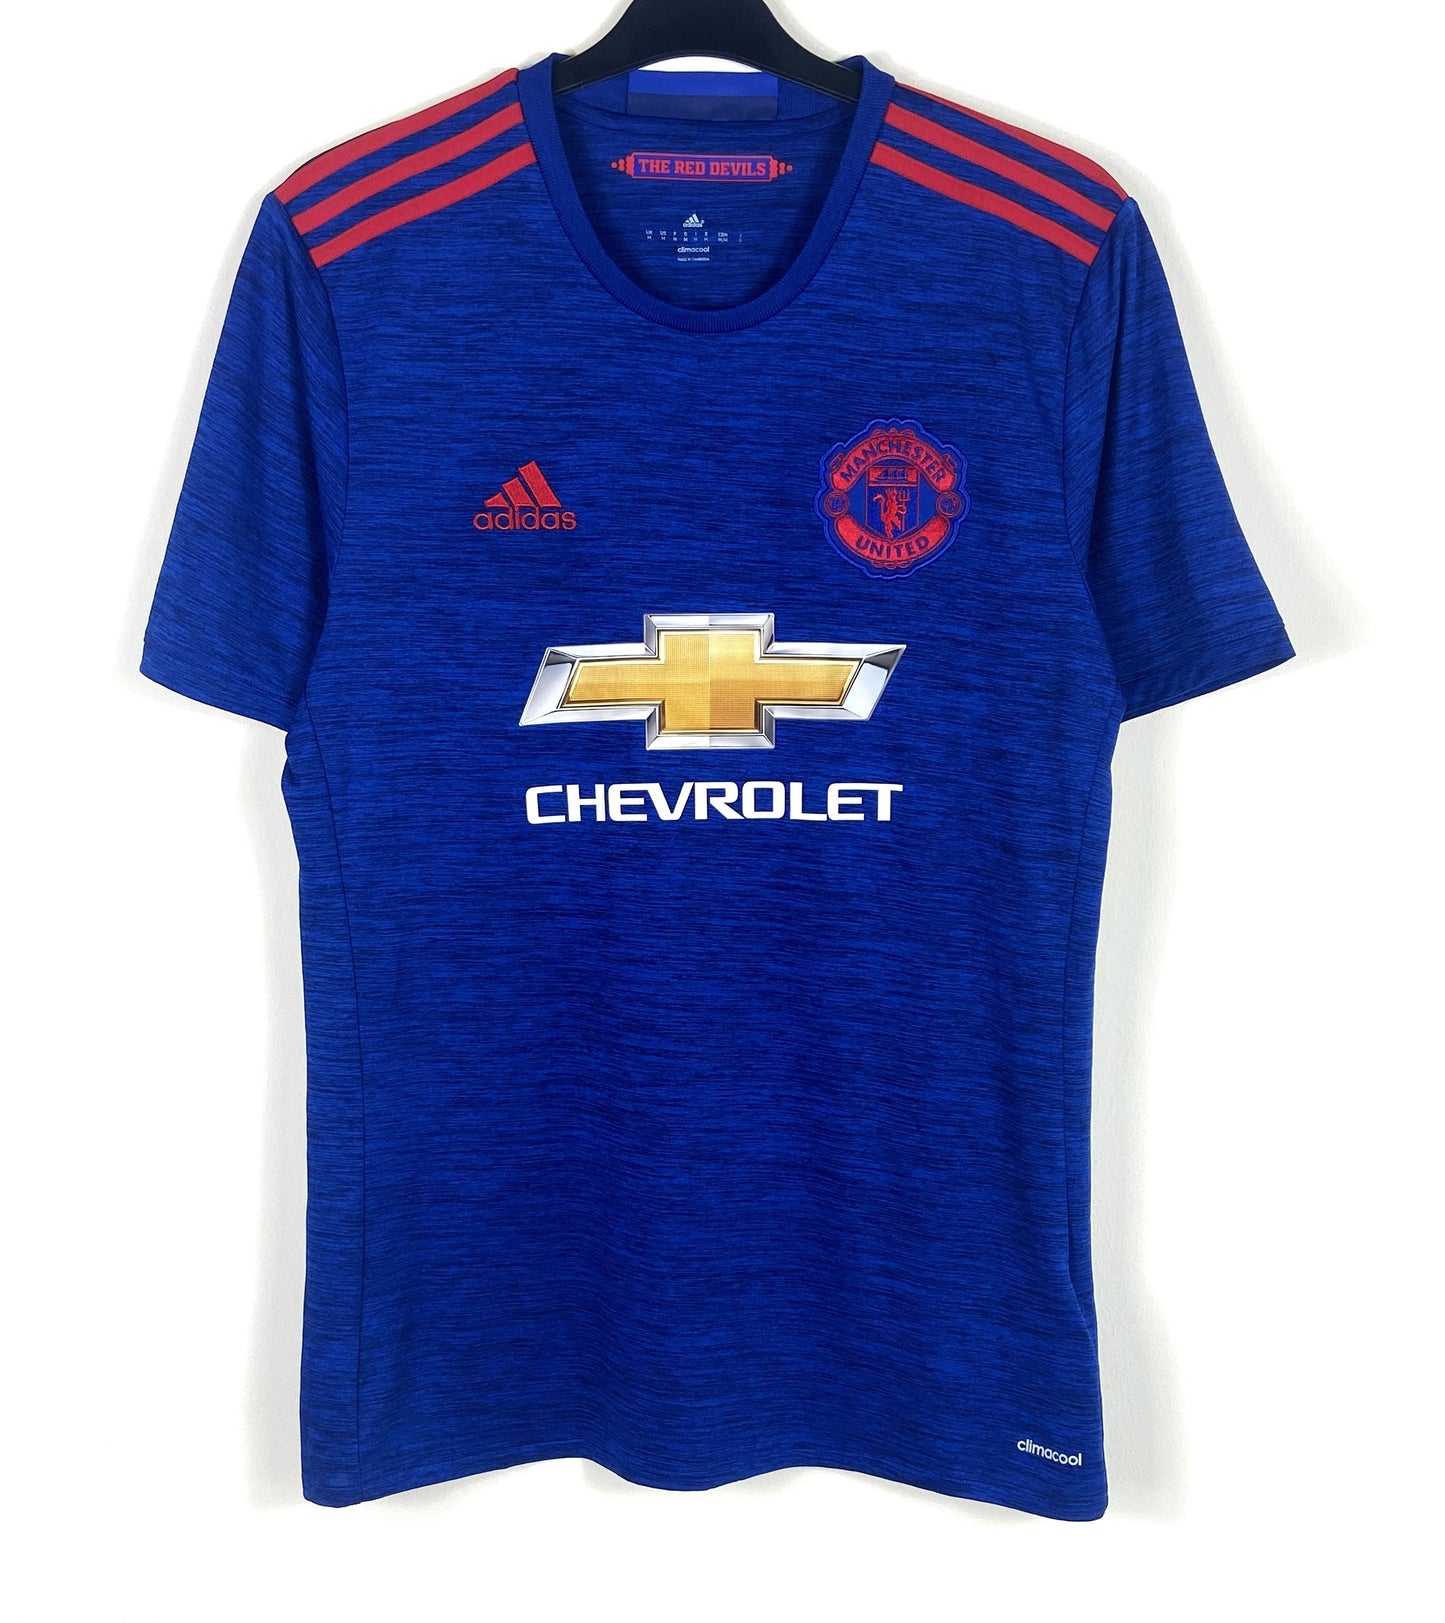 2016 2017 Manchester United Adidas Away Football Shirt IBRAHIMOVIC 9 Men's Medium